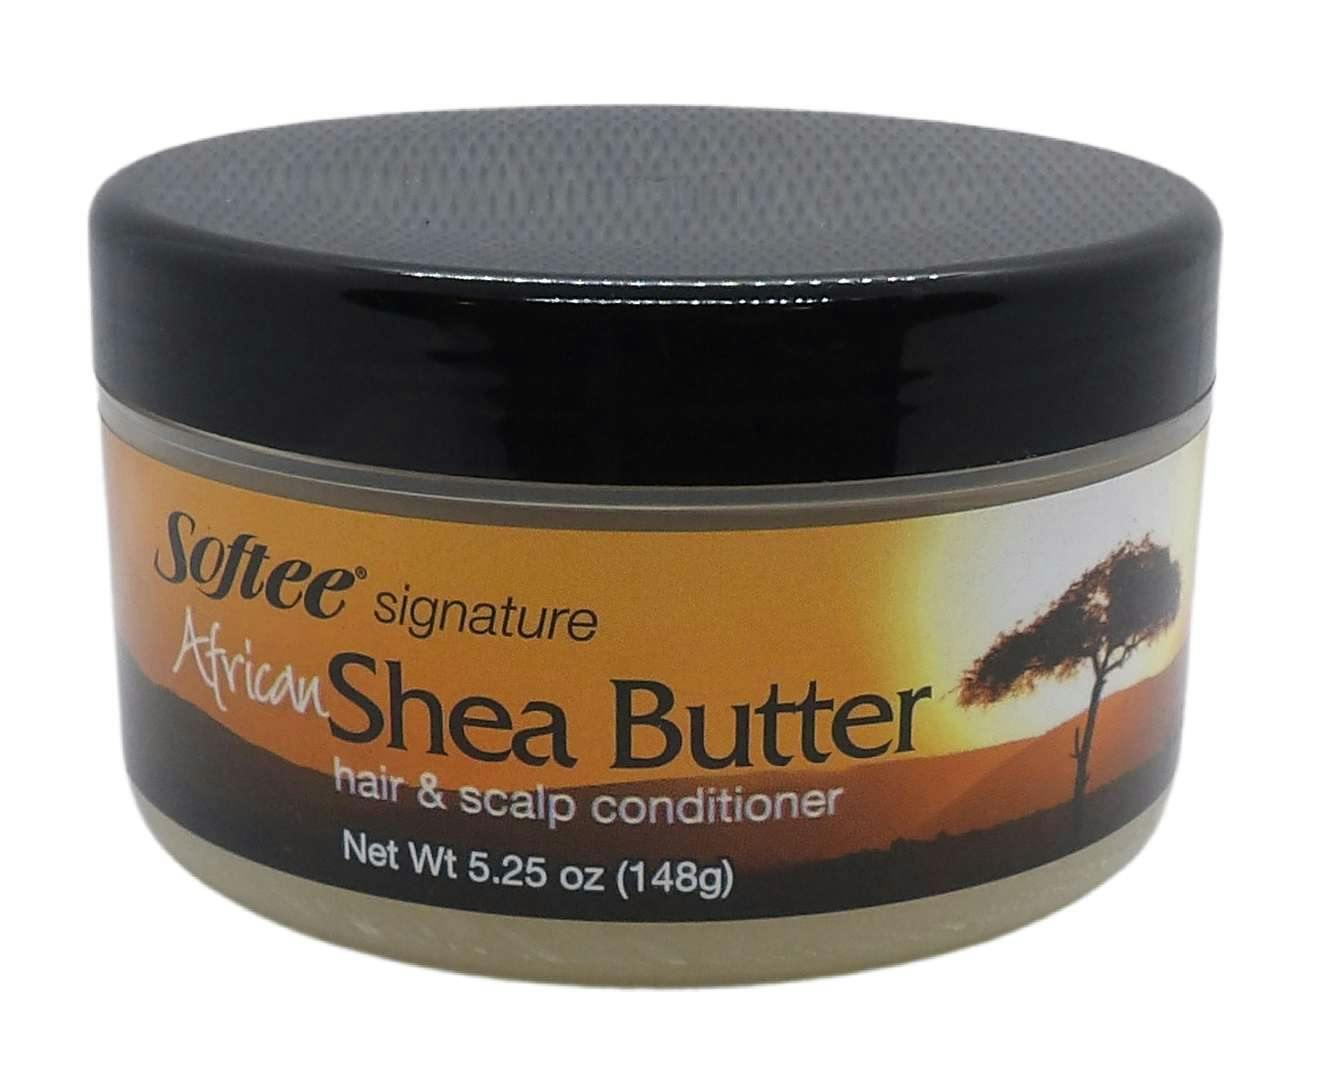 African Shea Butter Hair & Scalp Conditioner - 5.25 oz